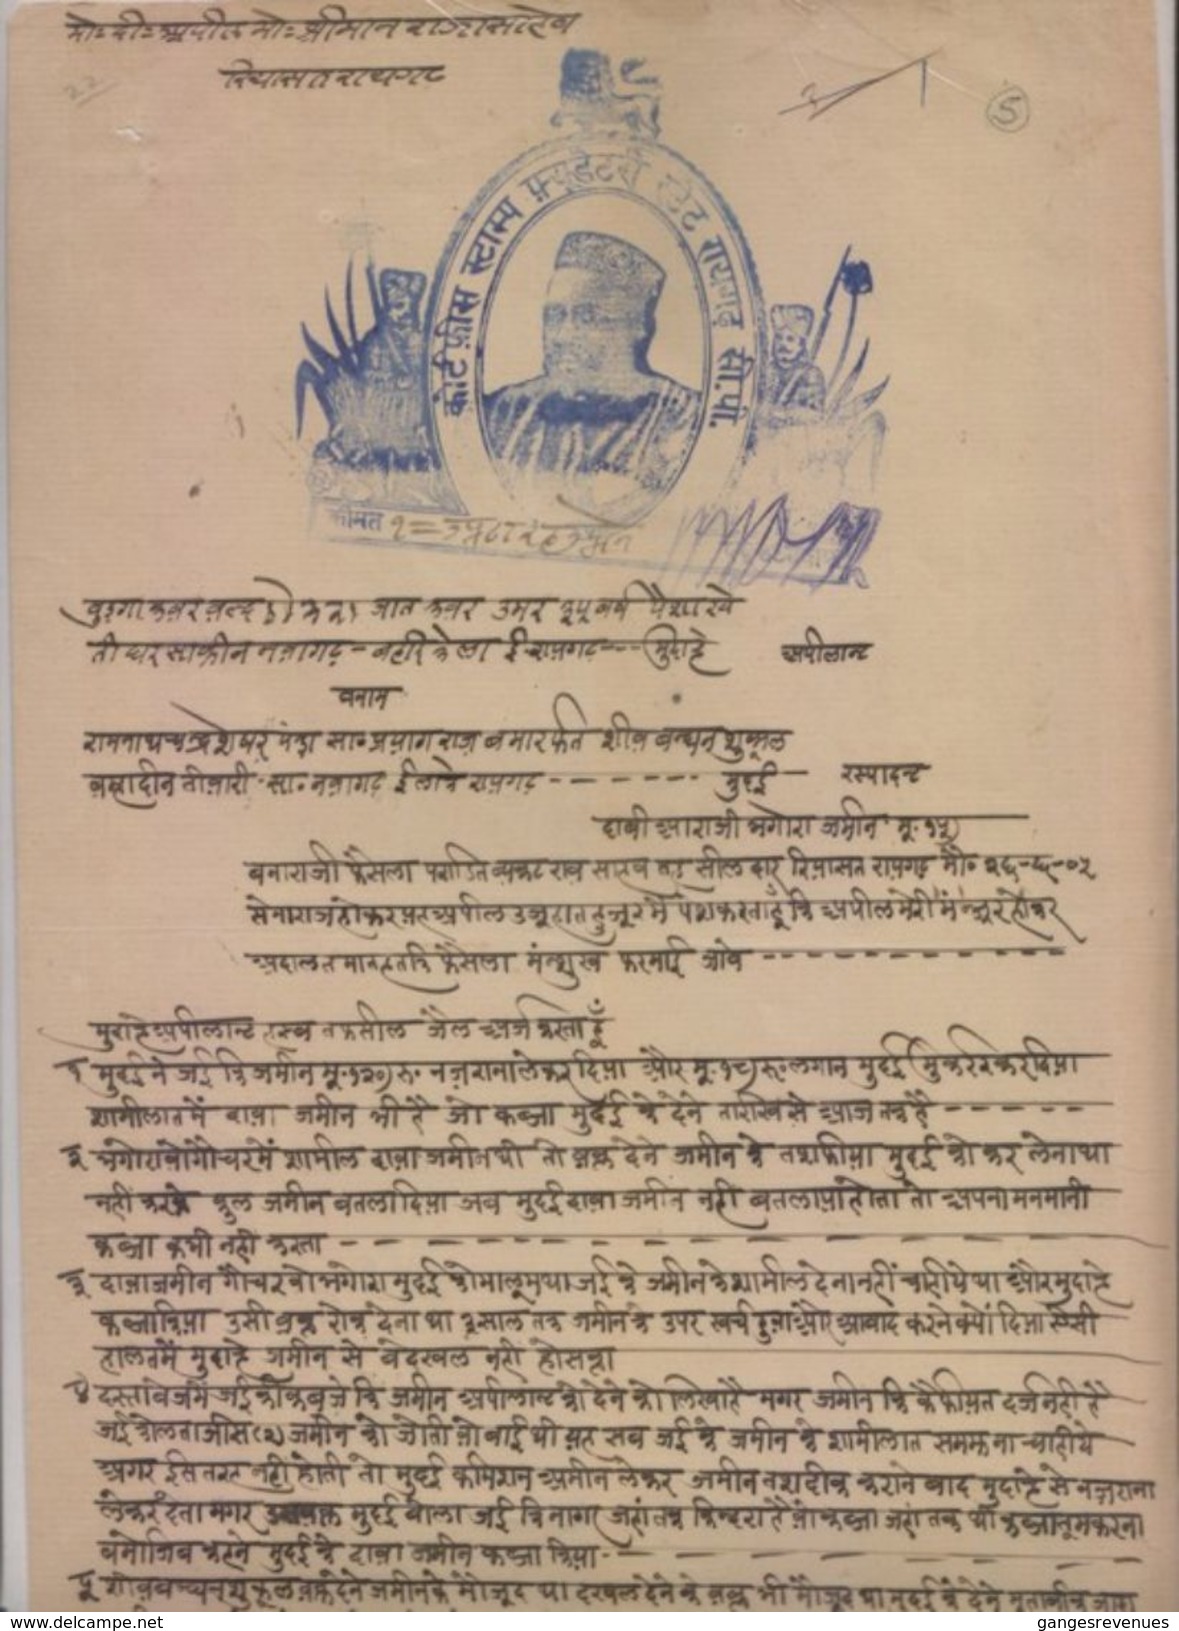 RAIGARH C.P.  1R2A Manuscript Value UNRECORDED Poppy Feilds Stamp Paper   #  00109 D  Inde Indien India - Nowanuggur